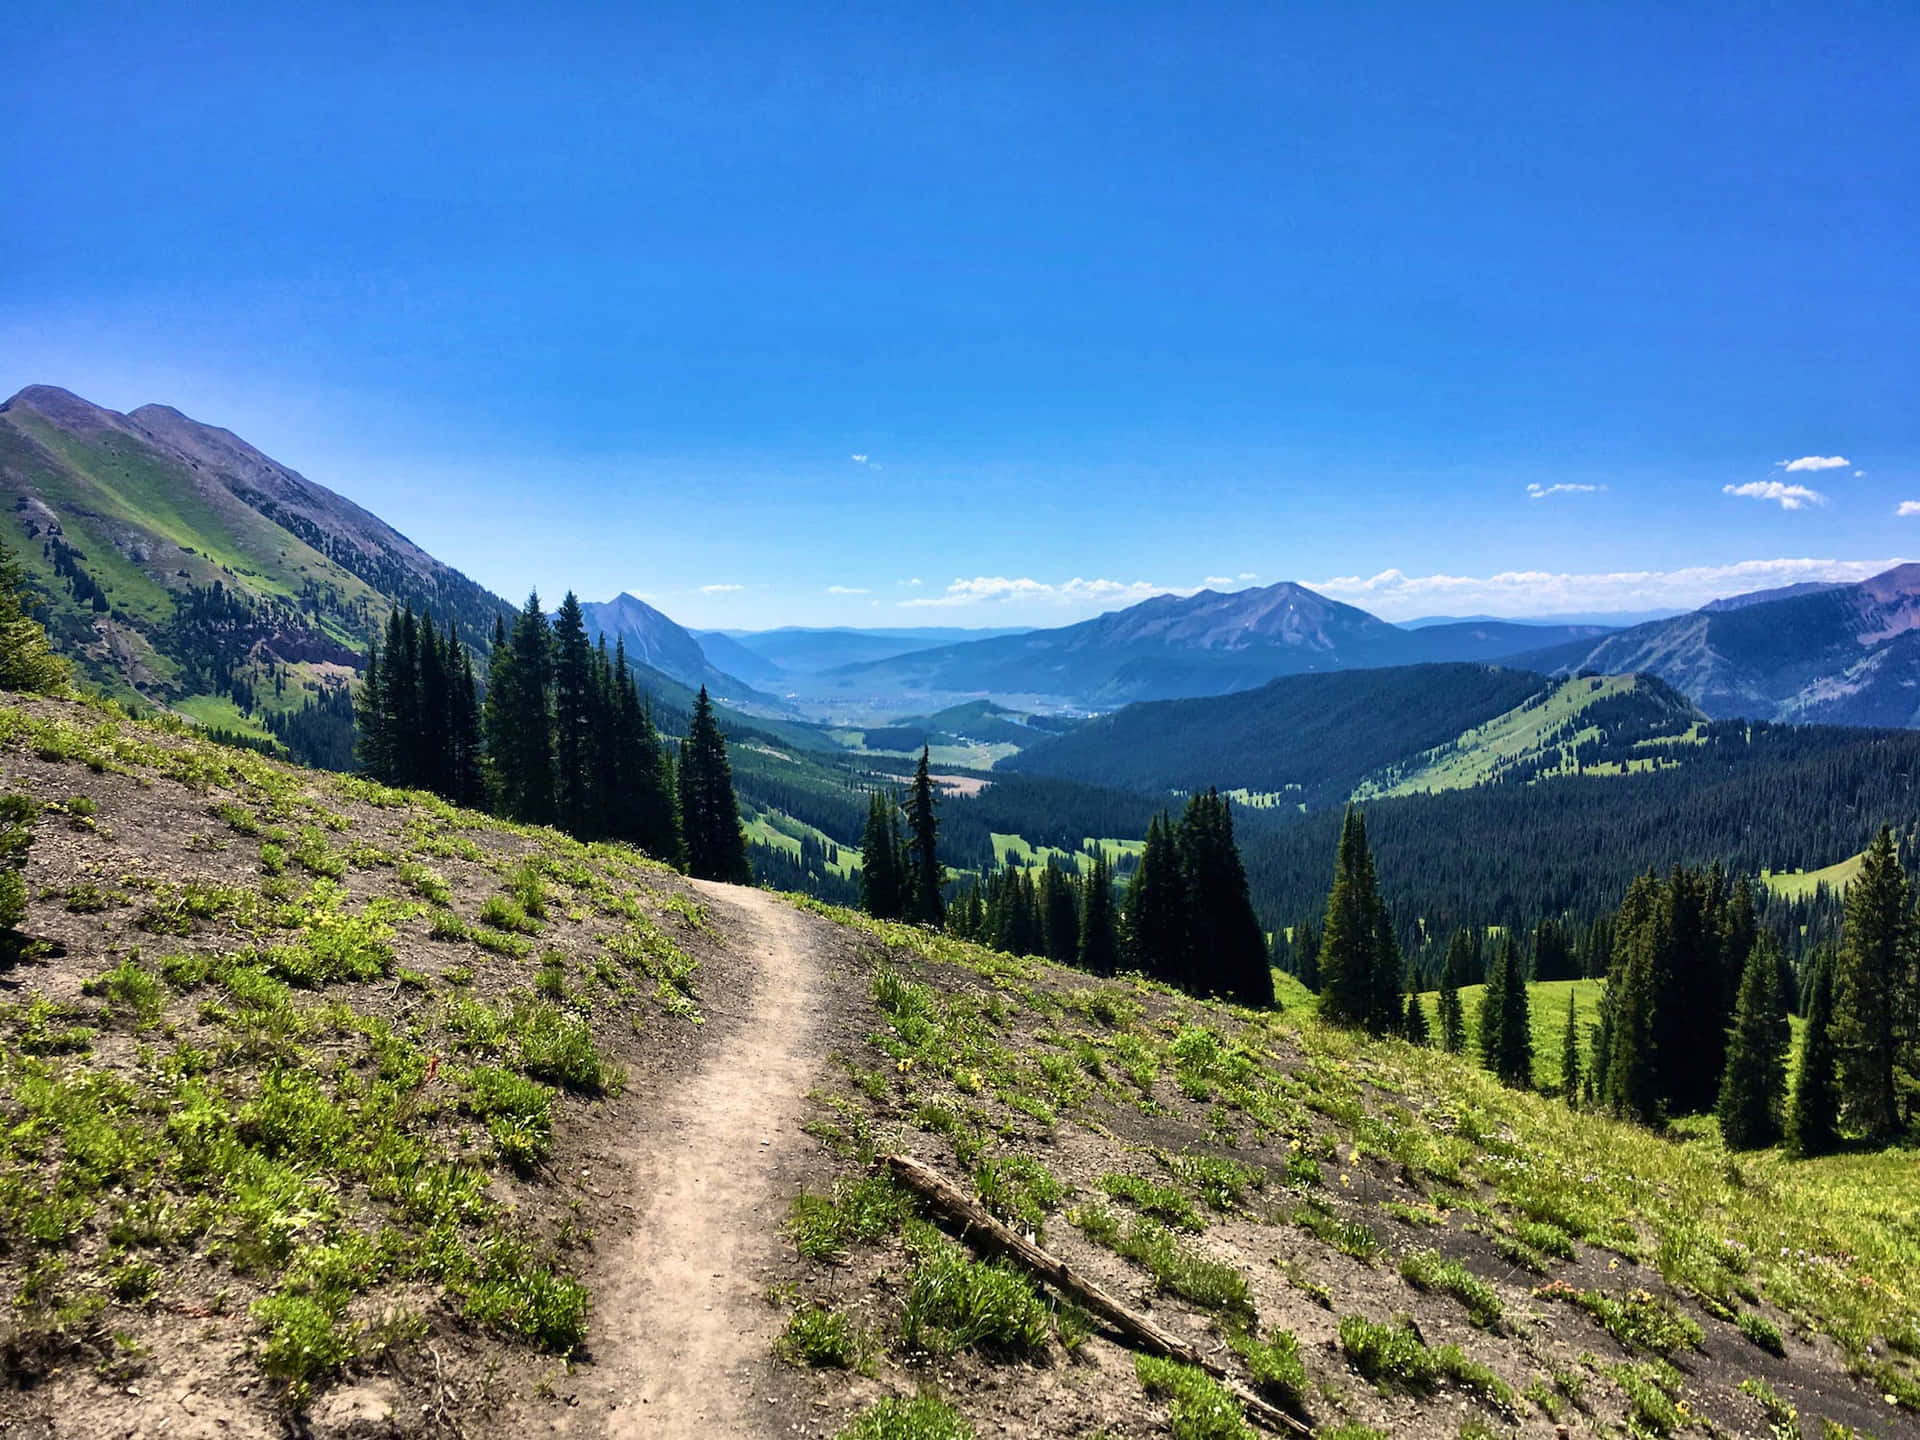 Caption: Scenic Mountain Hiking Trail